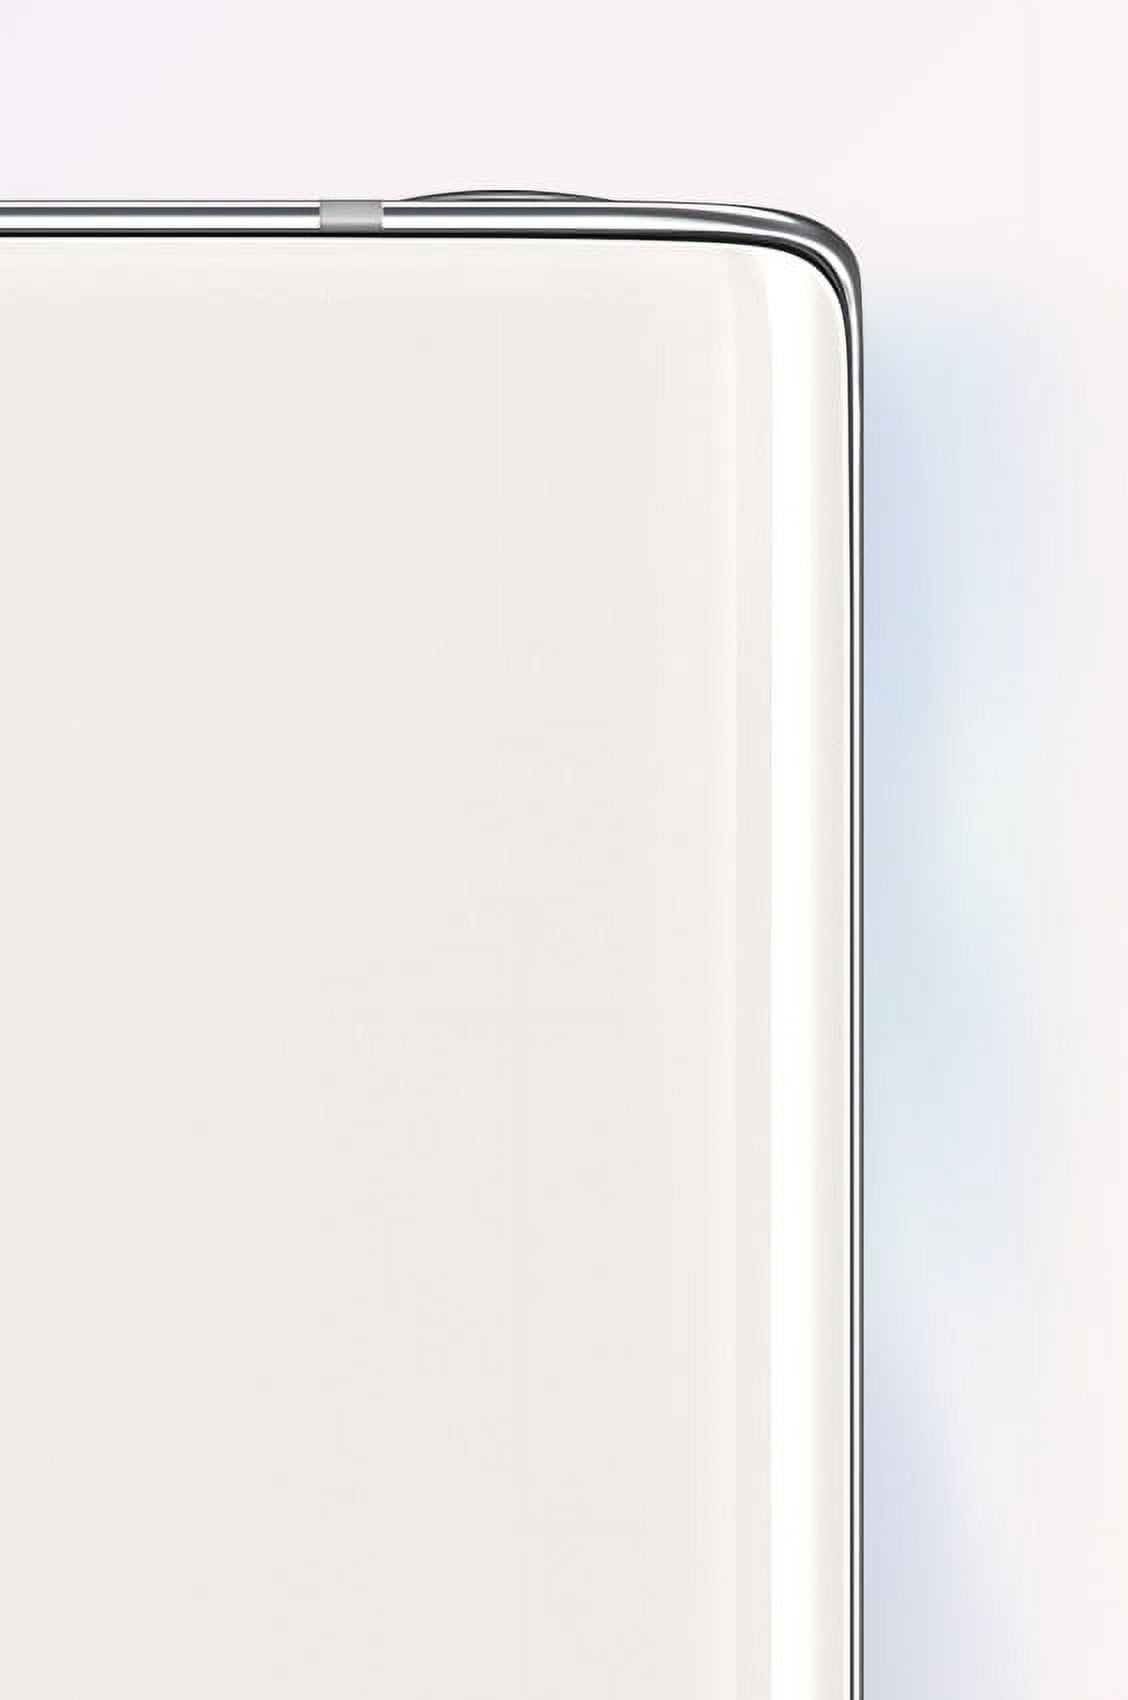 Samsung Galaxy Note 10, 256GB, Aura White - Fully Unlocked (Renewed)